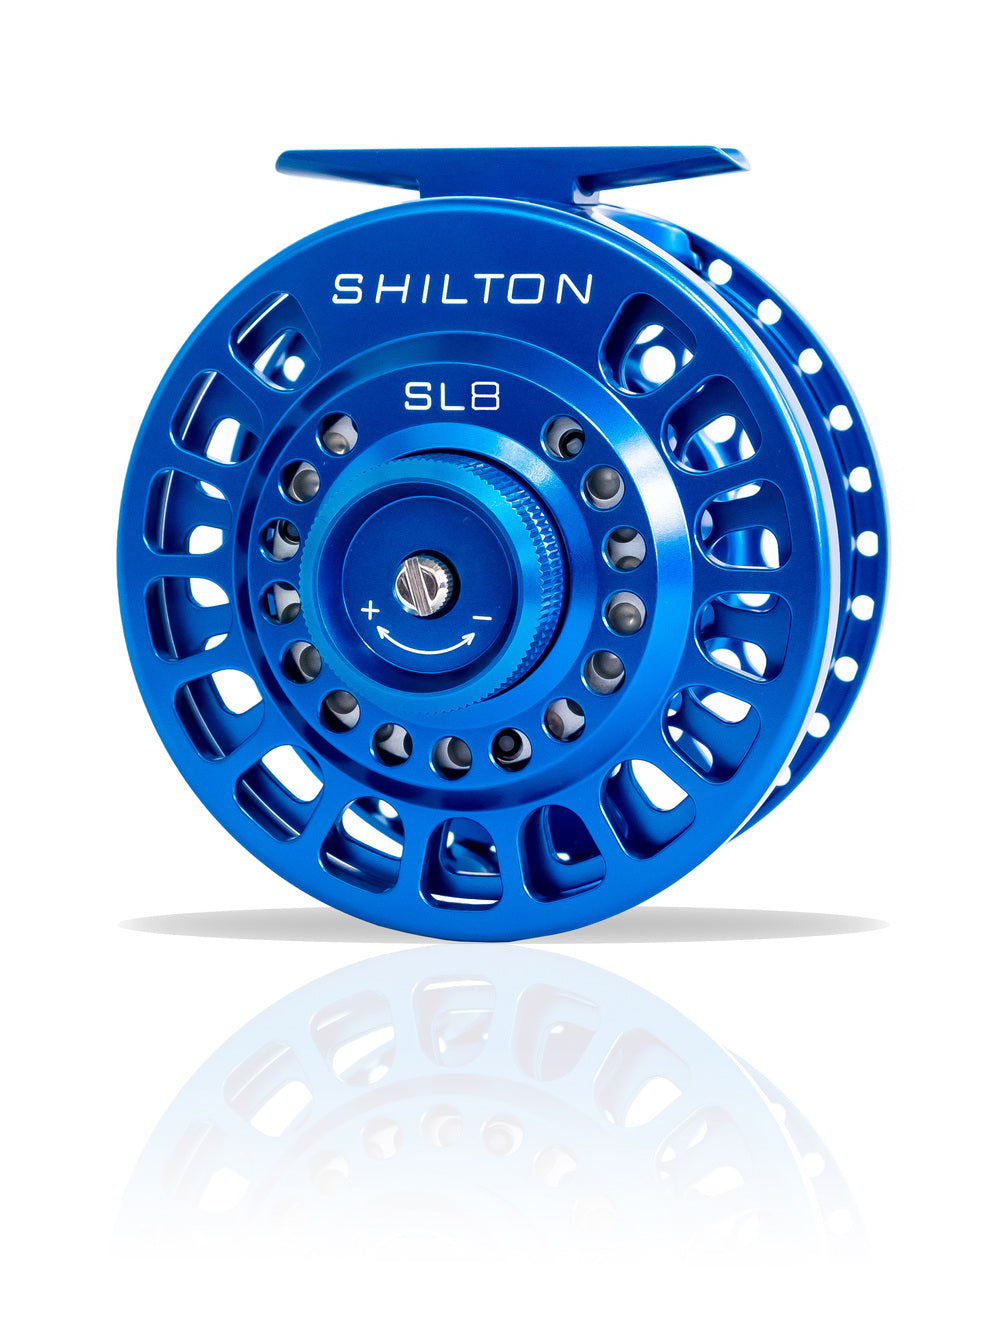 Shilton SL5 Turquoise Reel (7-8wt) SL8 in Turquoise